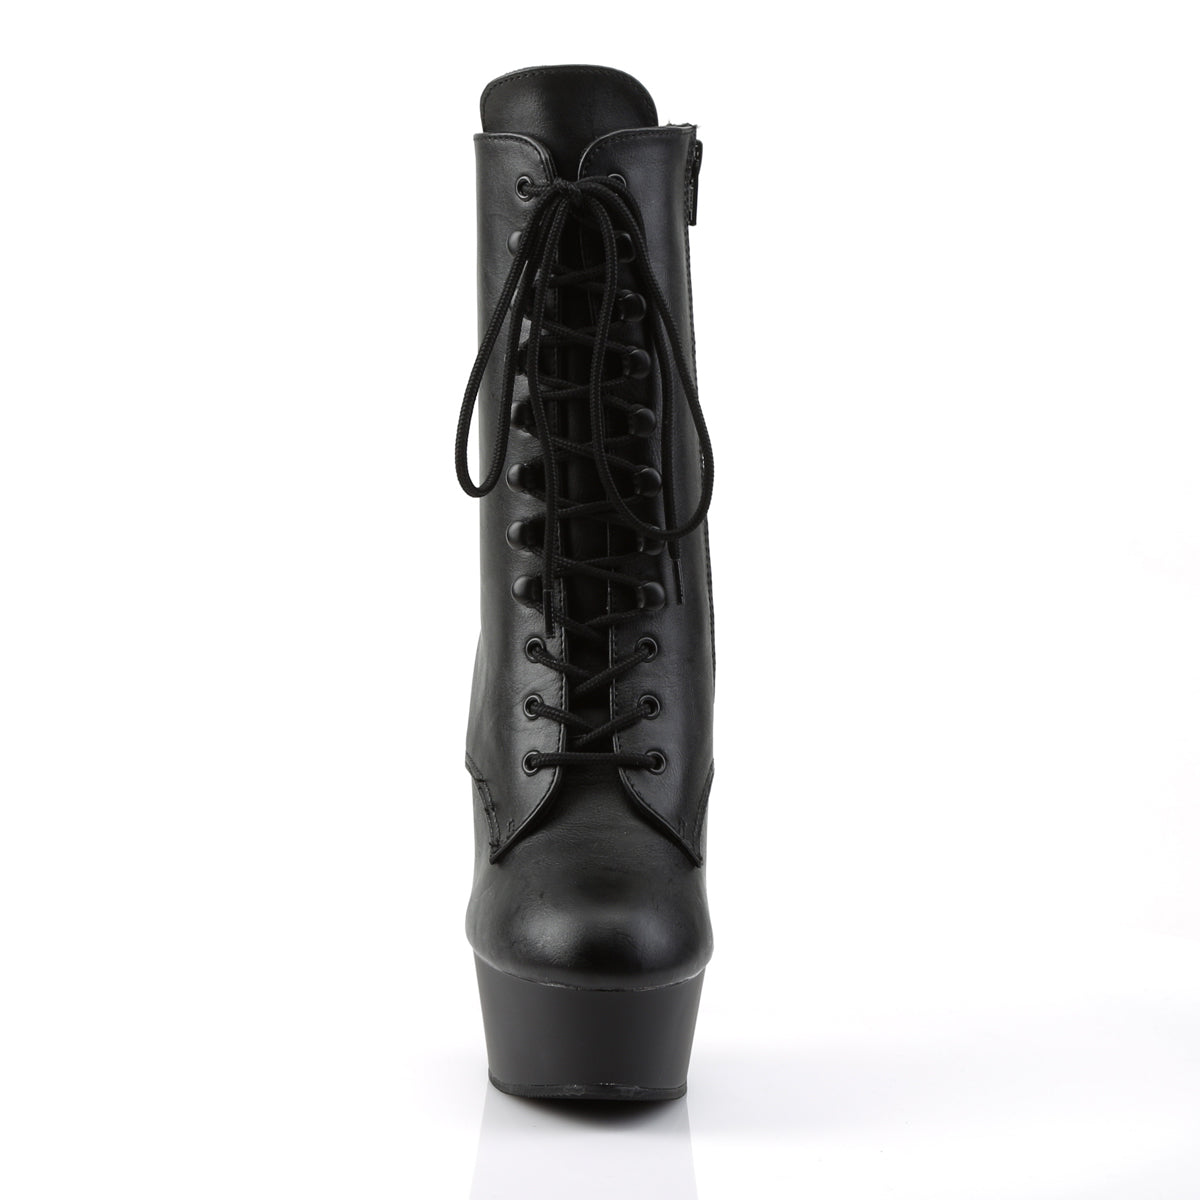 DELIGHT-1020 Black Calf High Boots